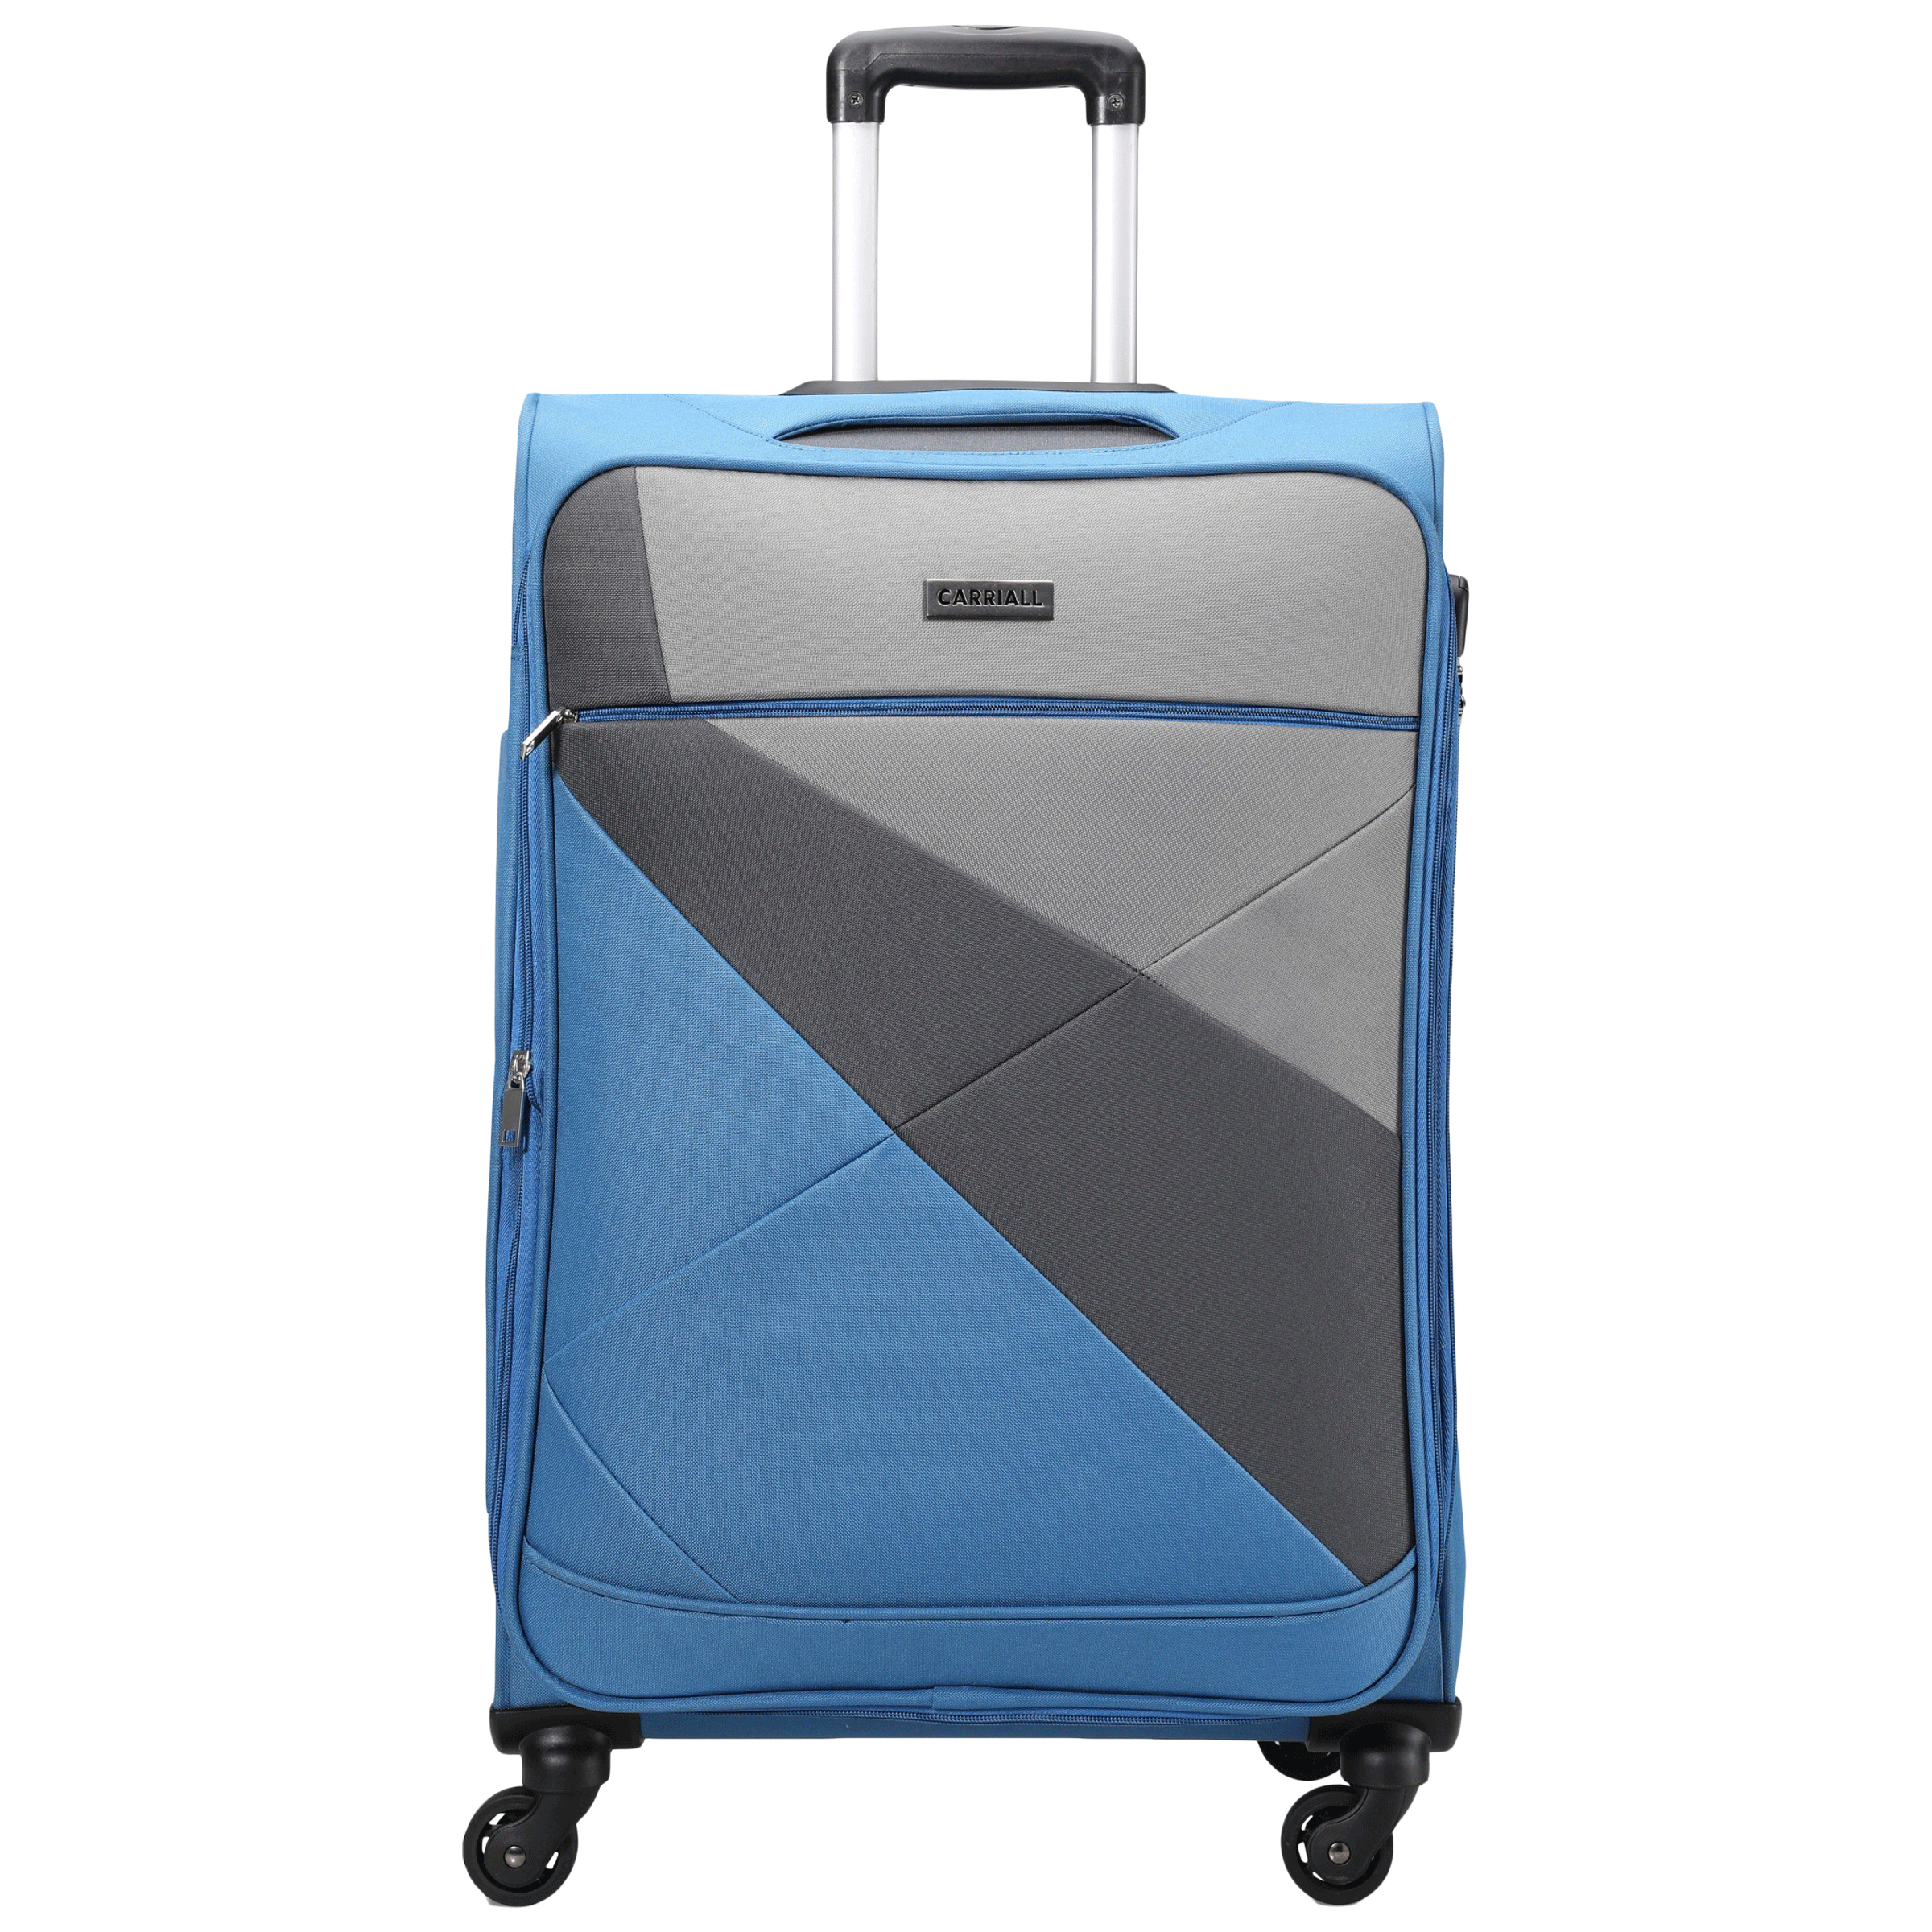 Carriall Vista Trolley Bag (Combination Lock, CASLVM002, Blue)